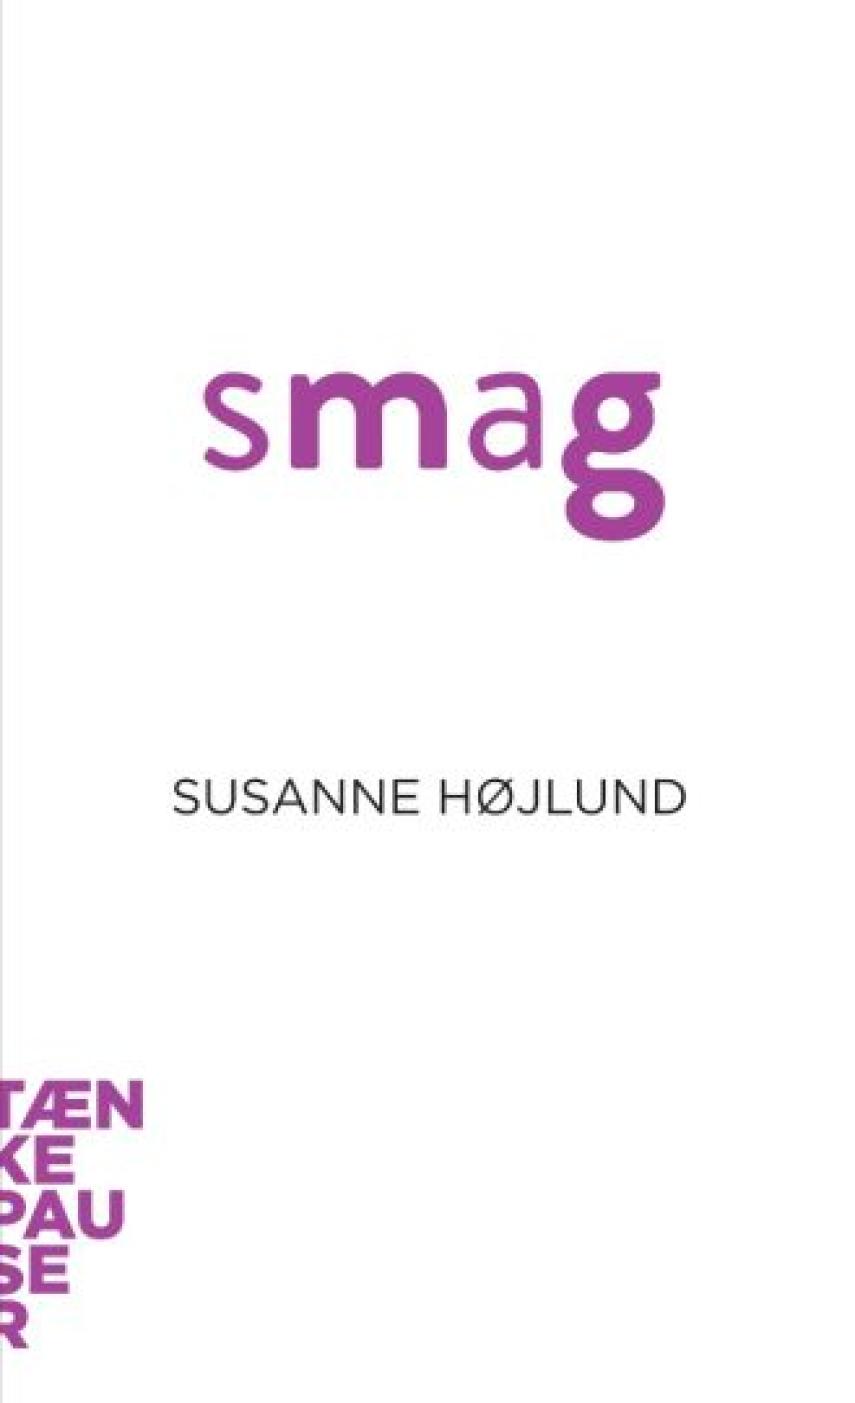 Susanne Højlund: Smag